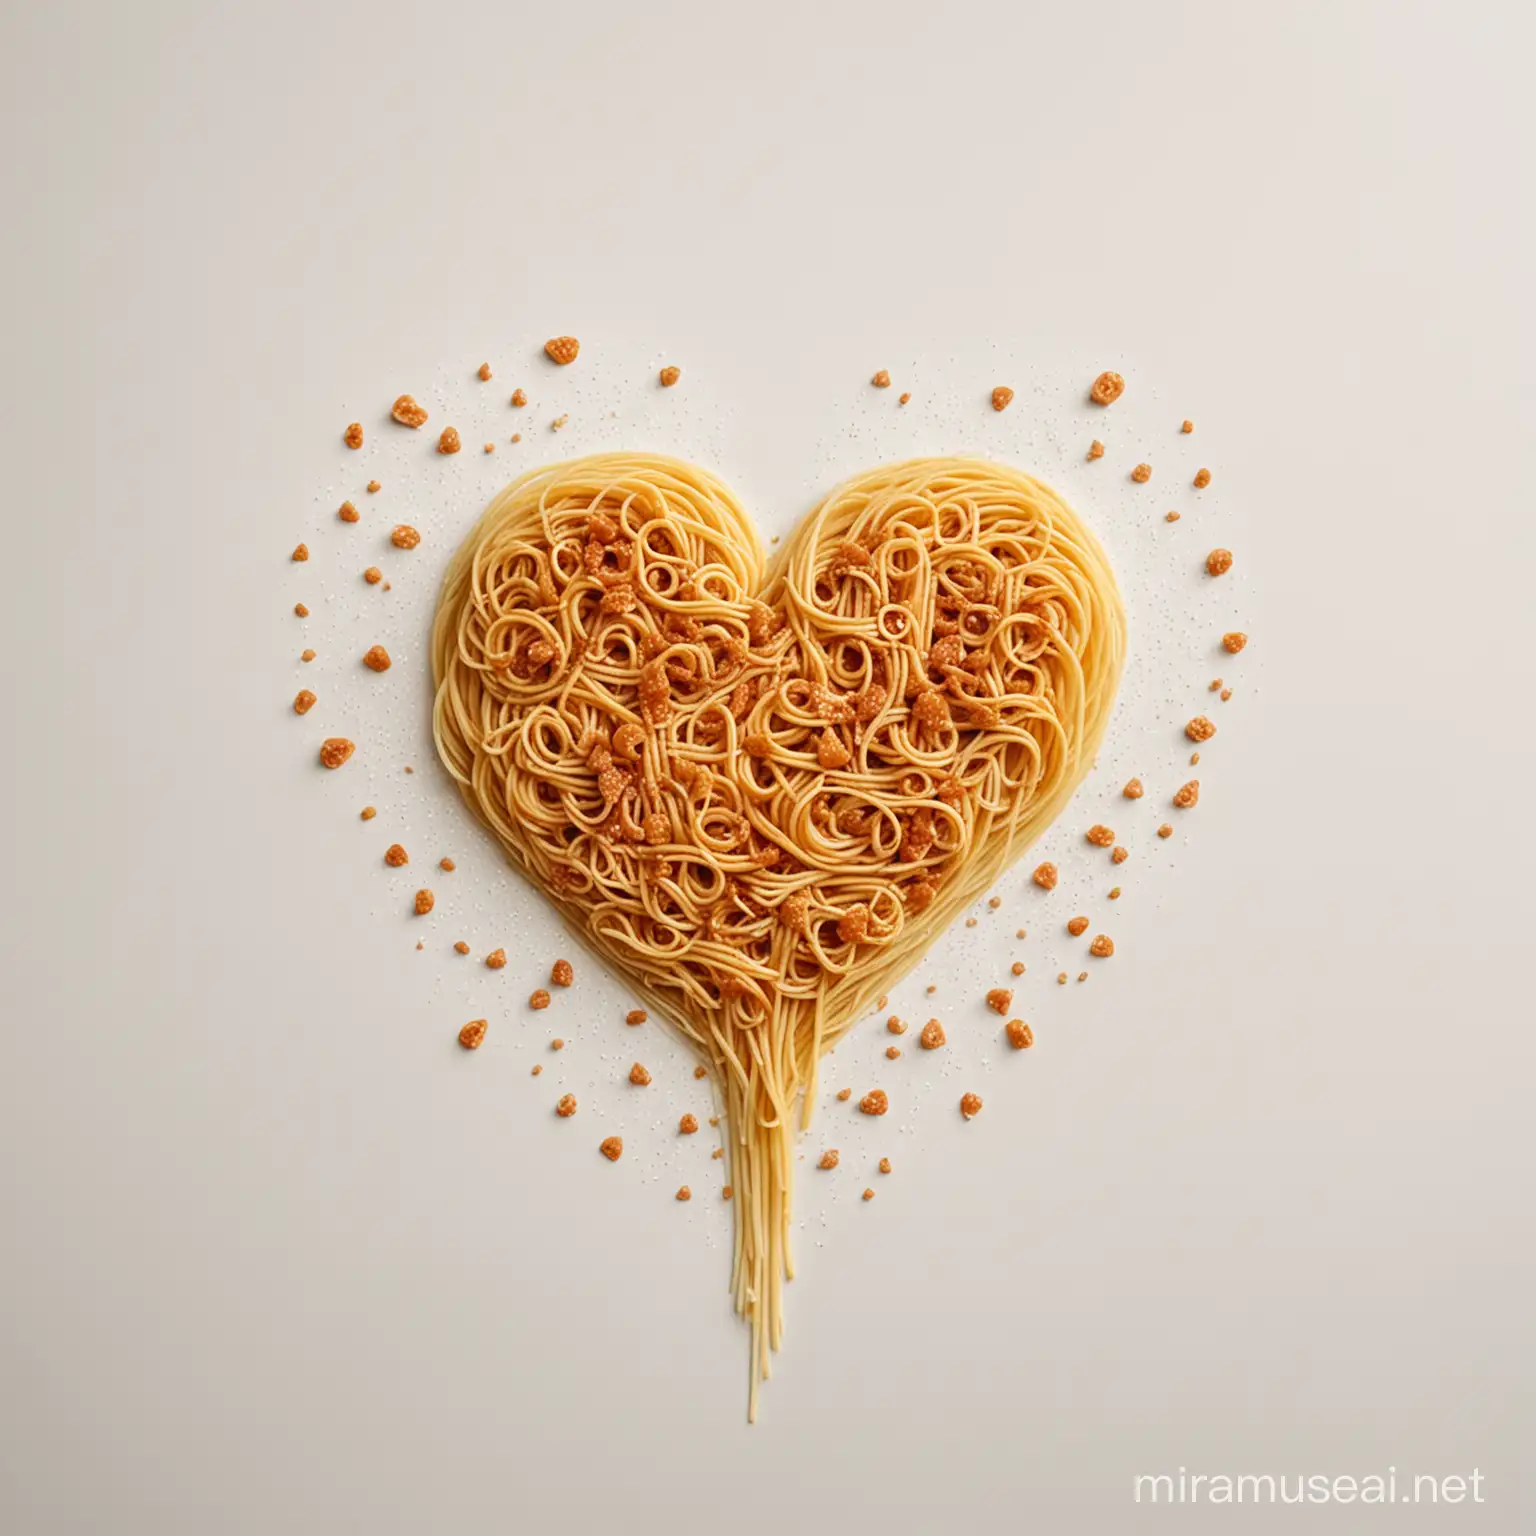 Lonely Broken Heart Spaghetti on White Background